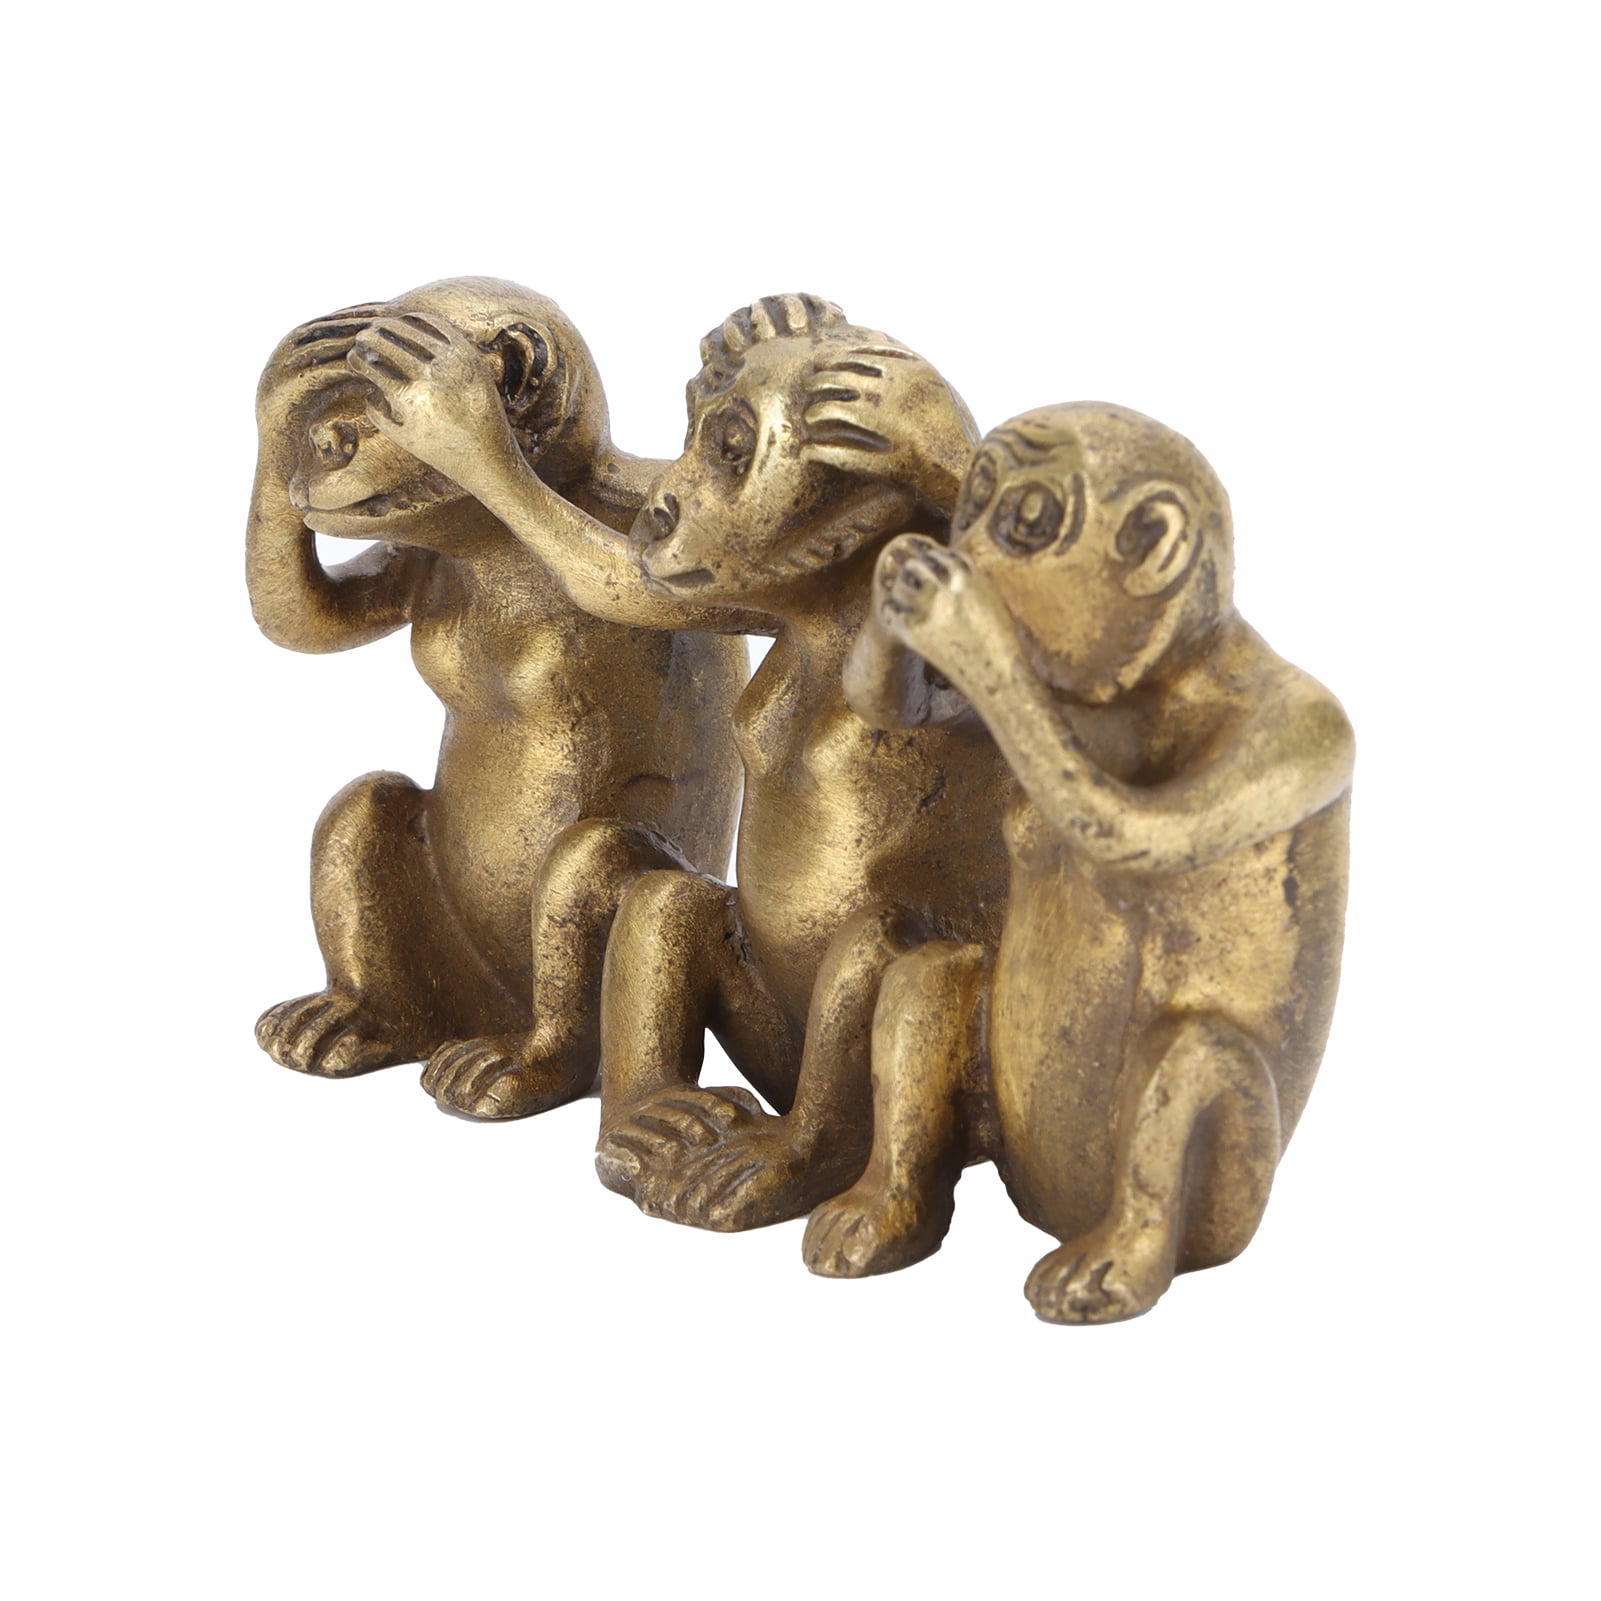 Set of 3 Bronze Coloured Wise Monkeys Ornaments Figures Gift